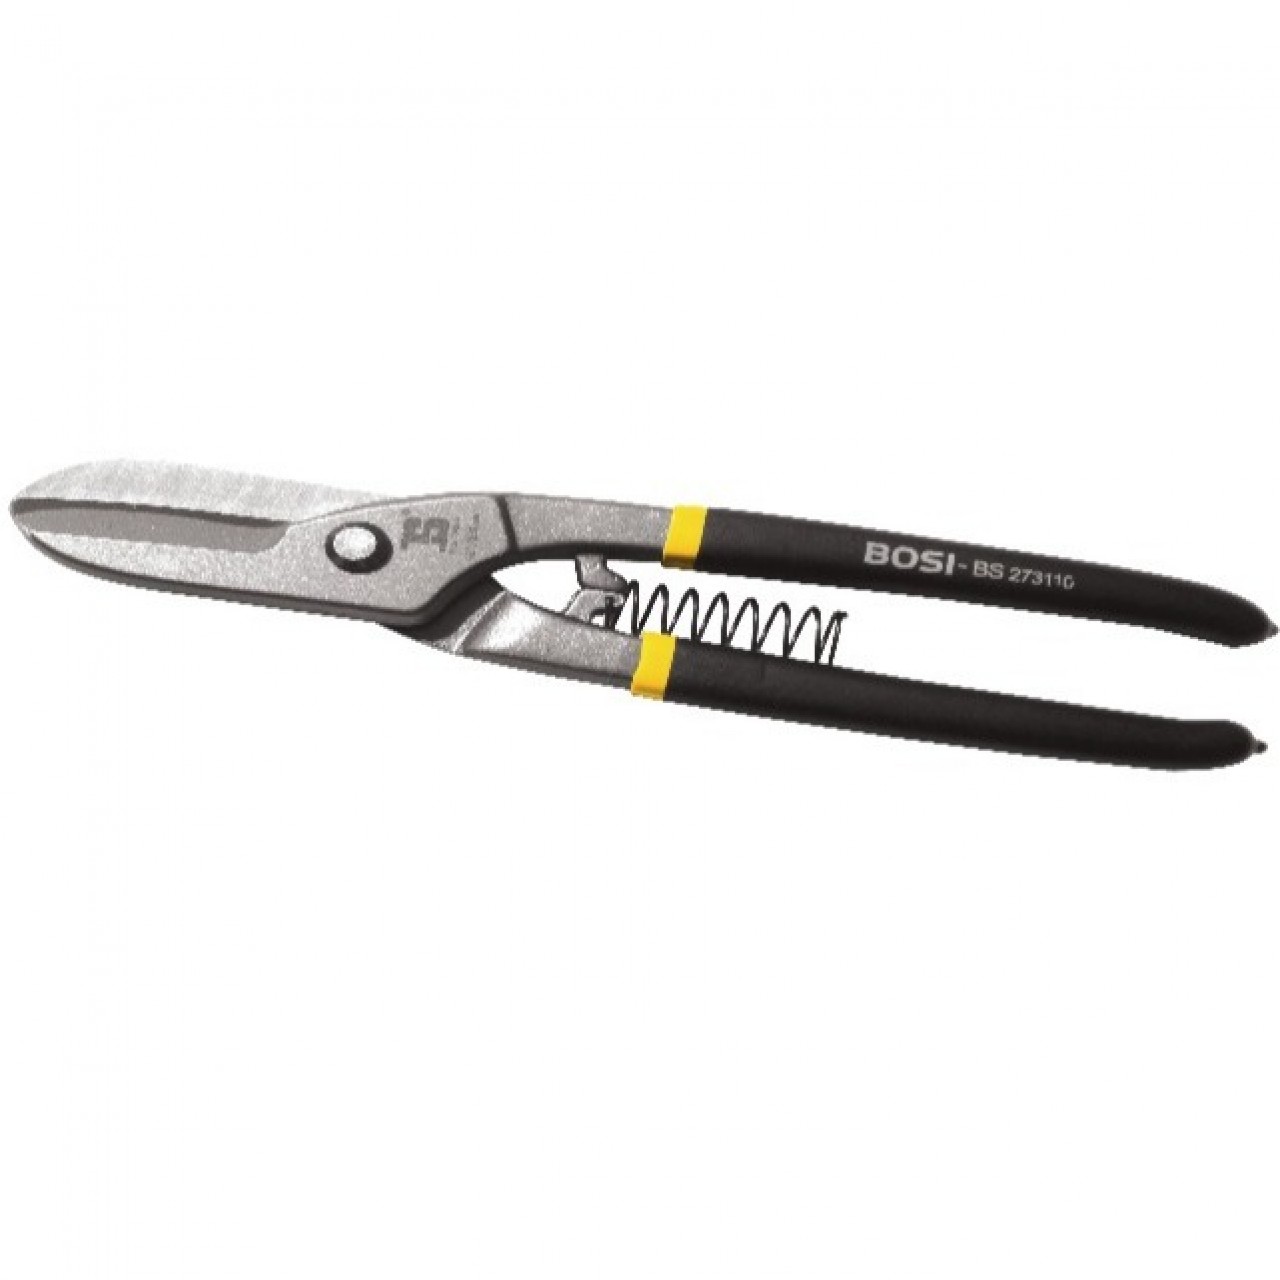 Tinman's Snips Series - BOSI Steel Scissors BS273110 -10"/250MM